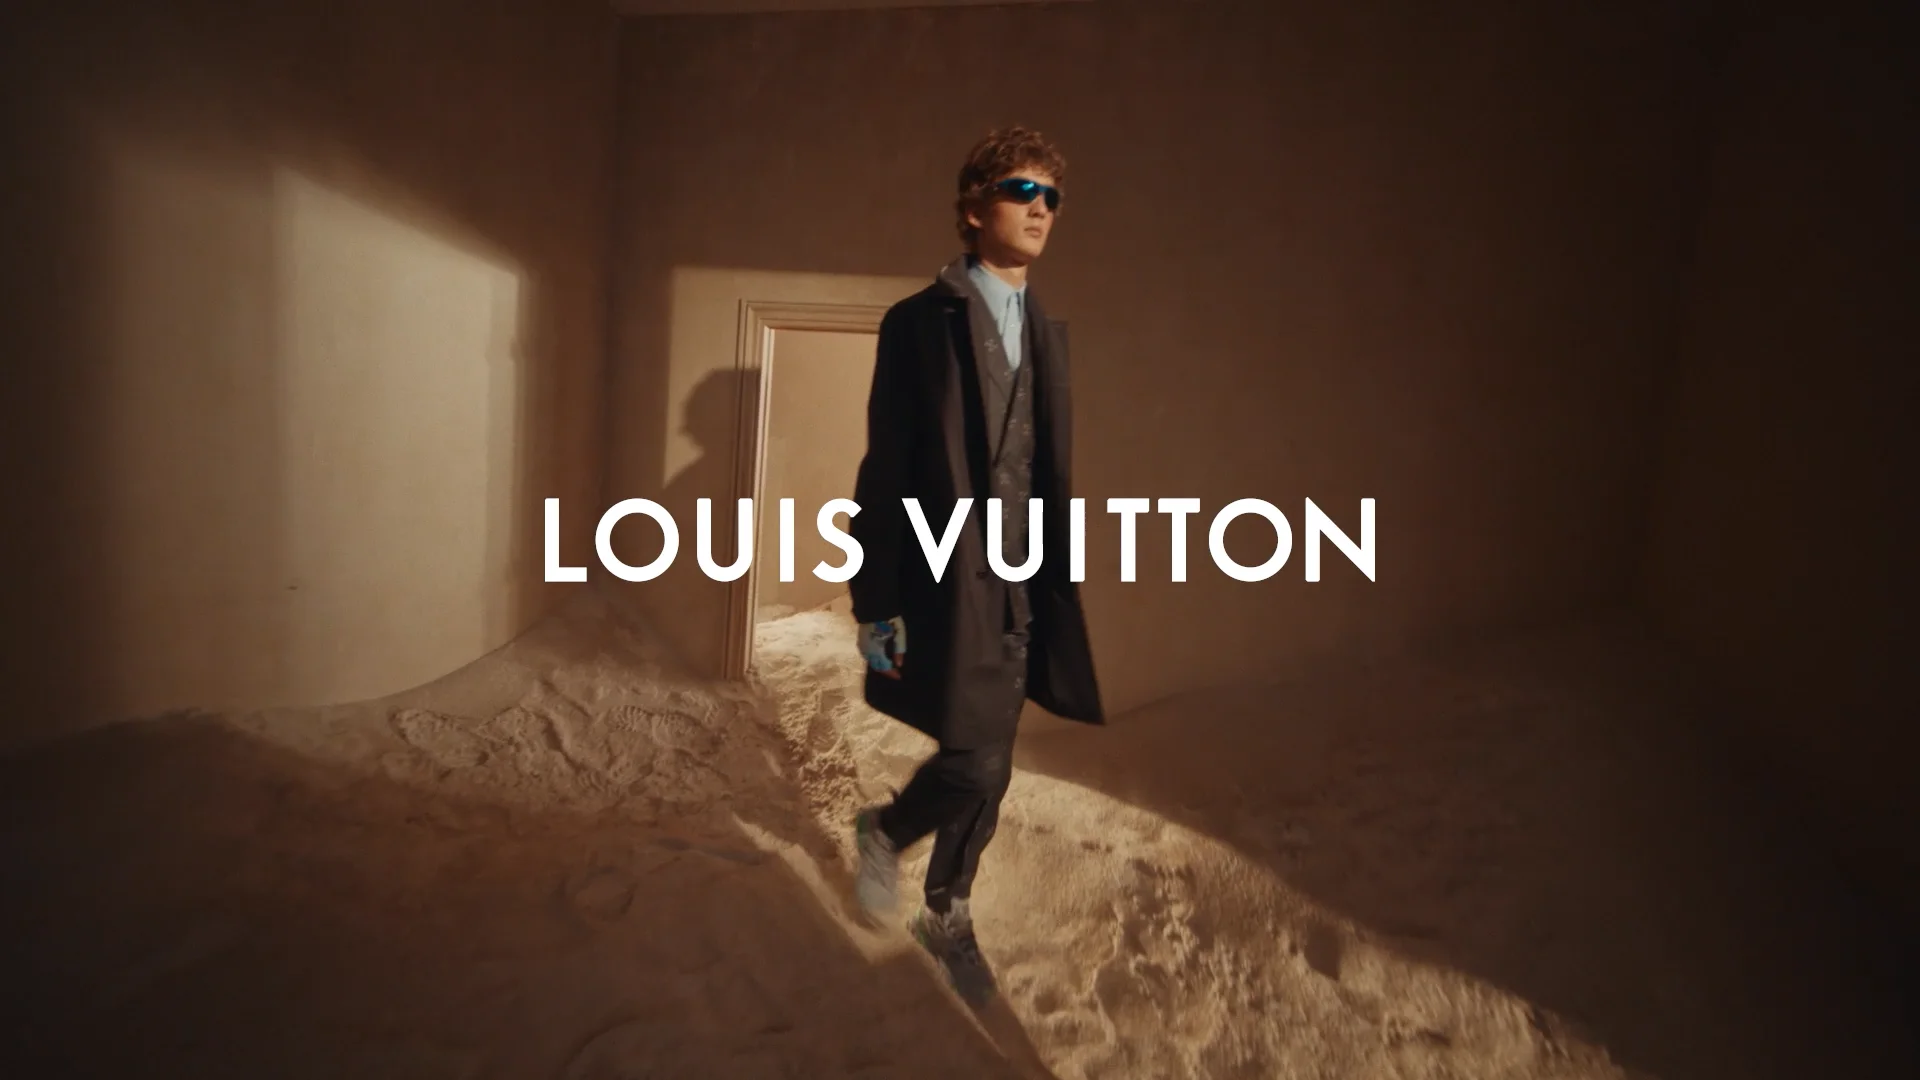 Reinvented for a modern wardrobe, the stunning new @louisvuitton